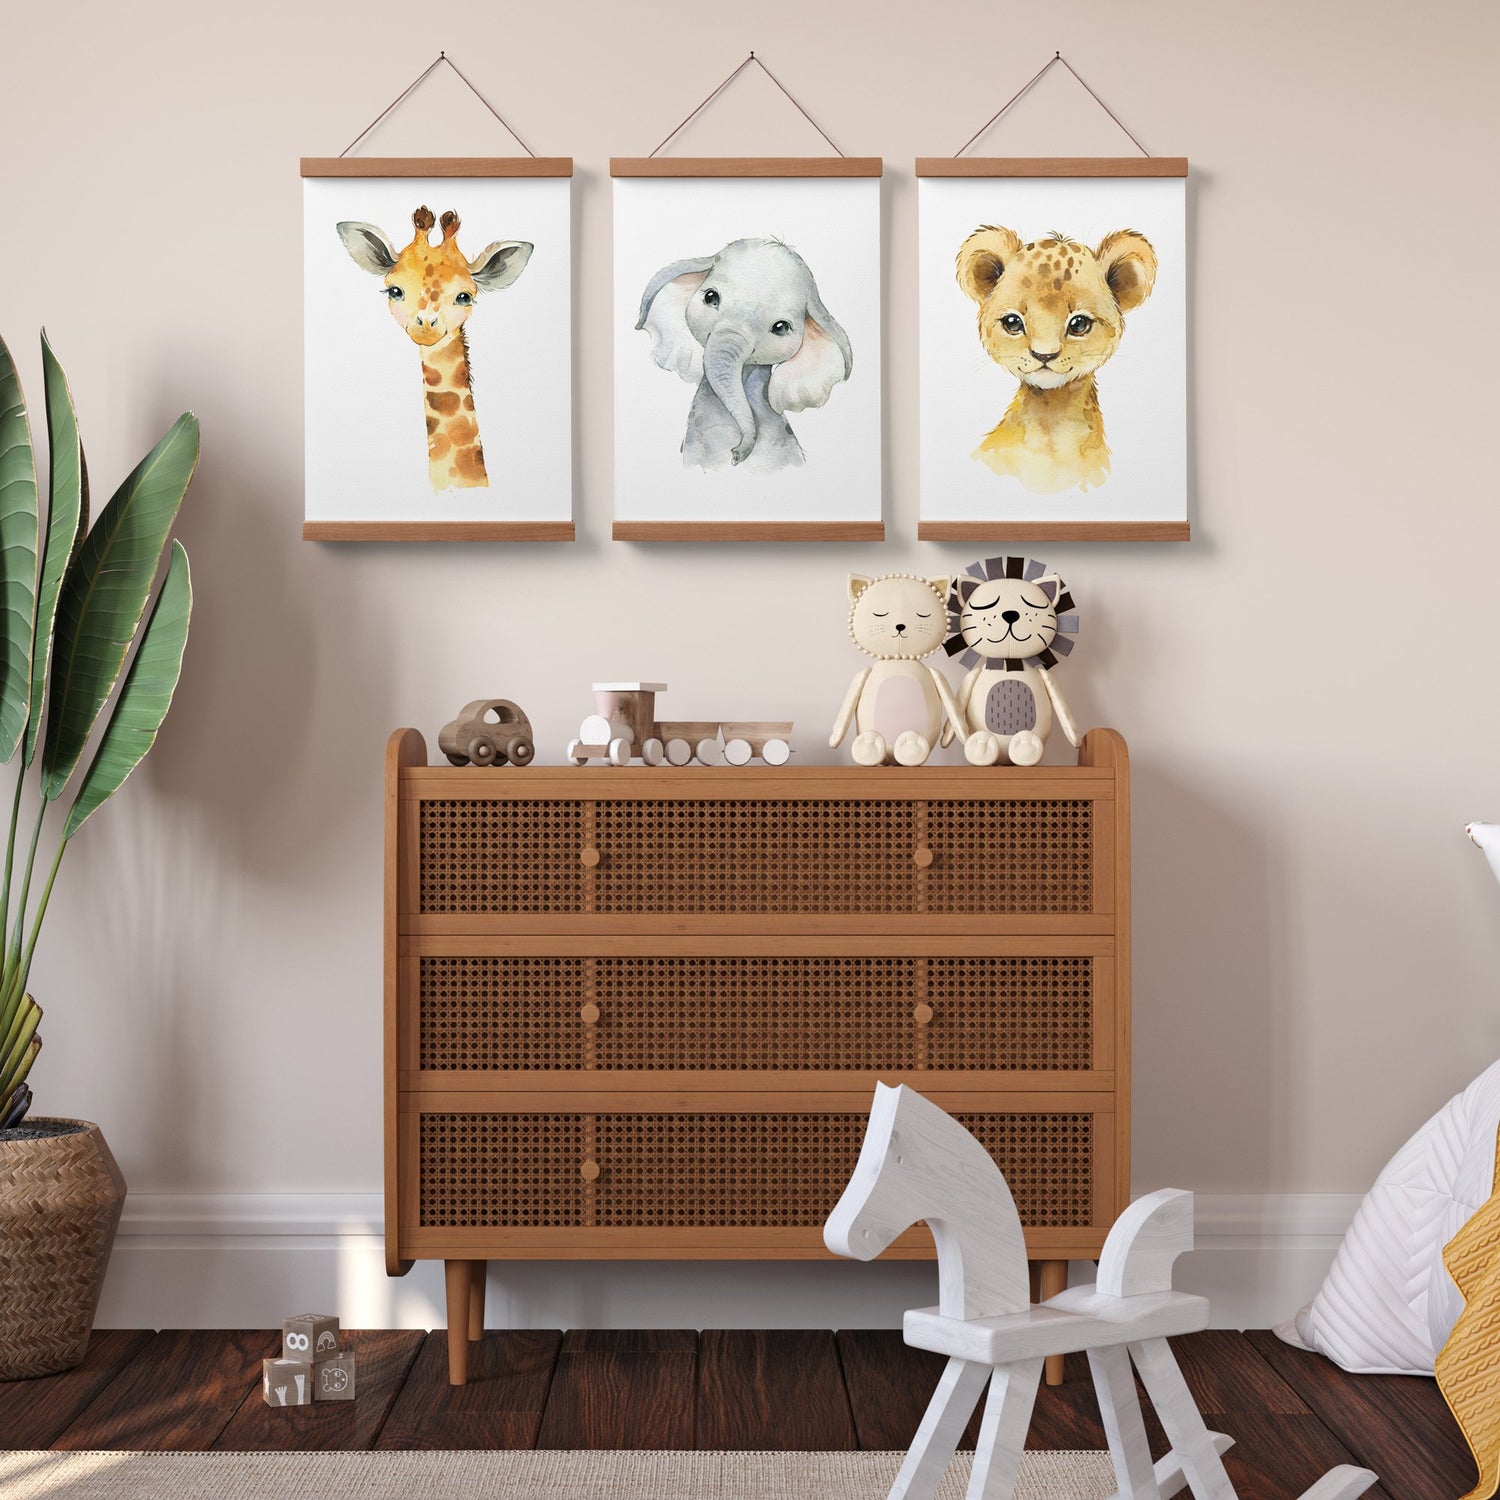 Baby Lion, Elephant & Giraffe Prints